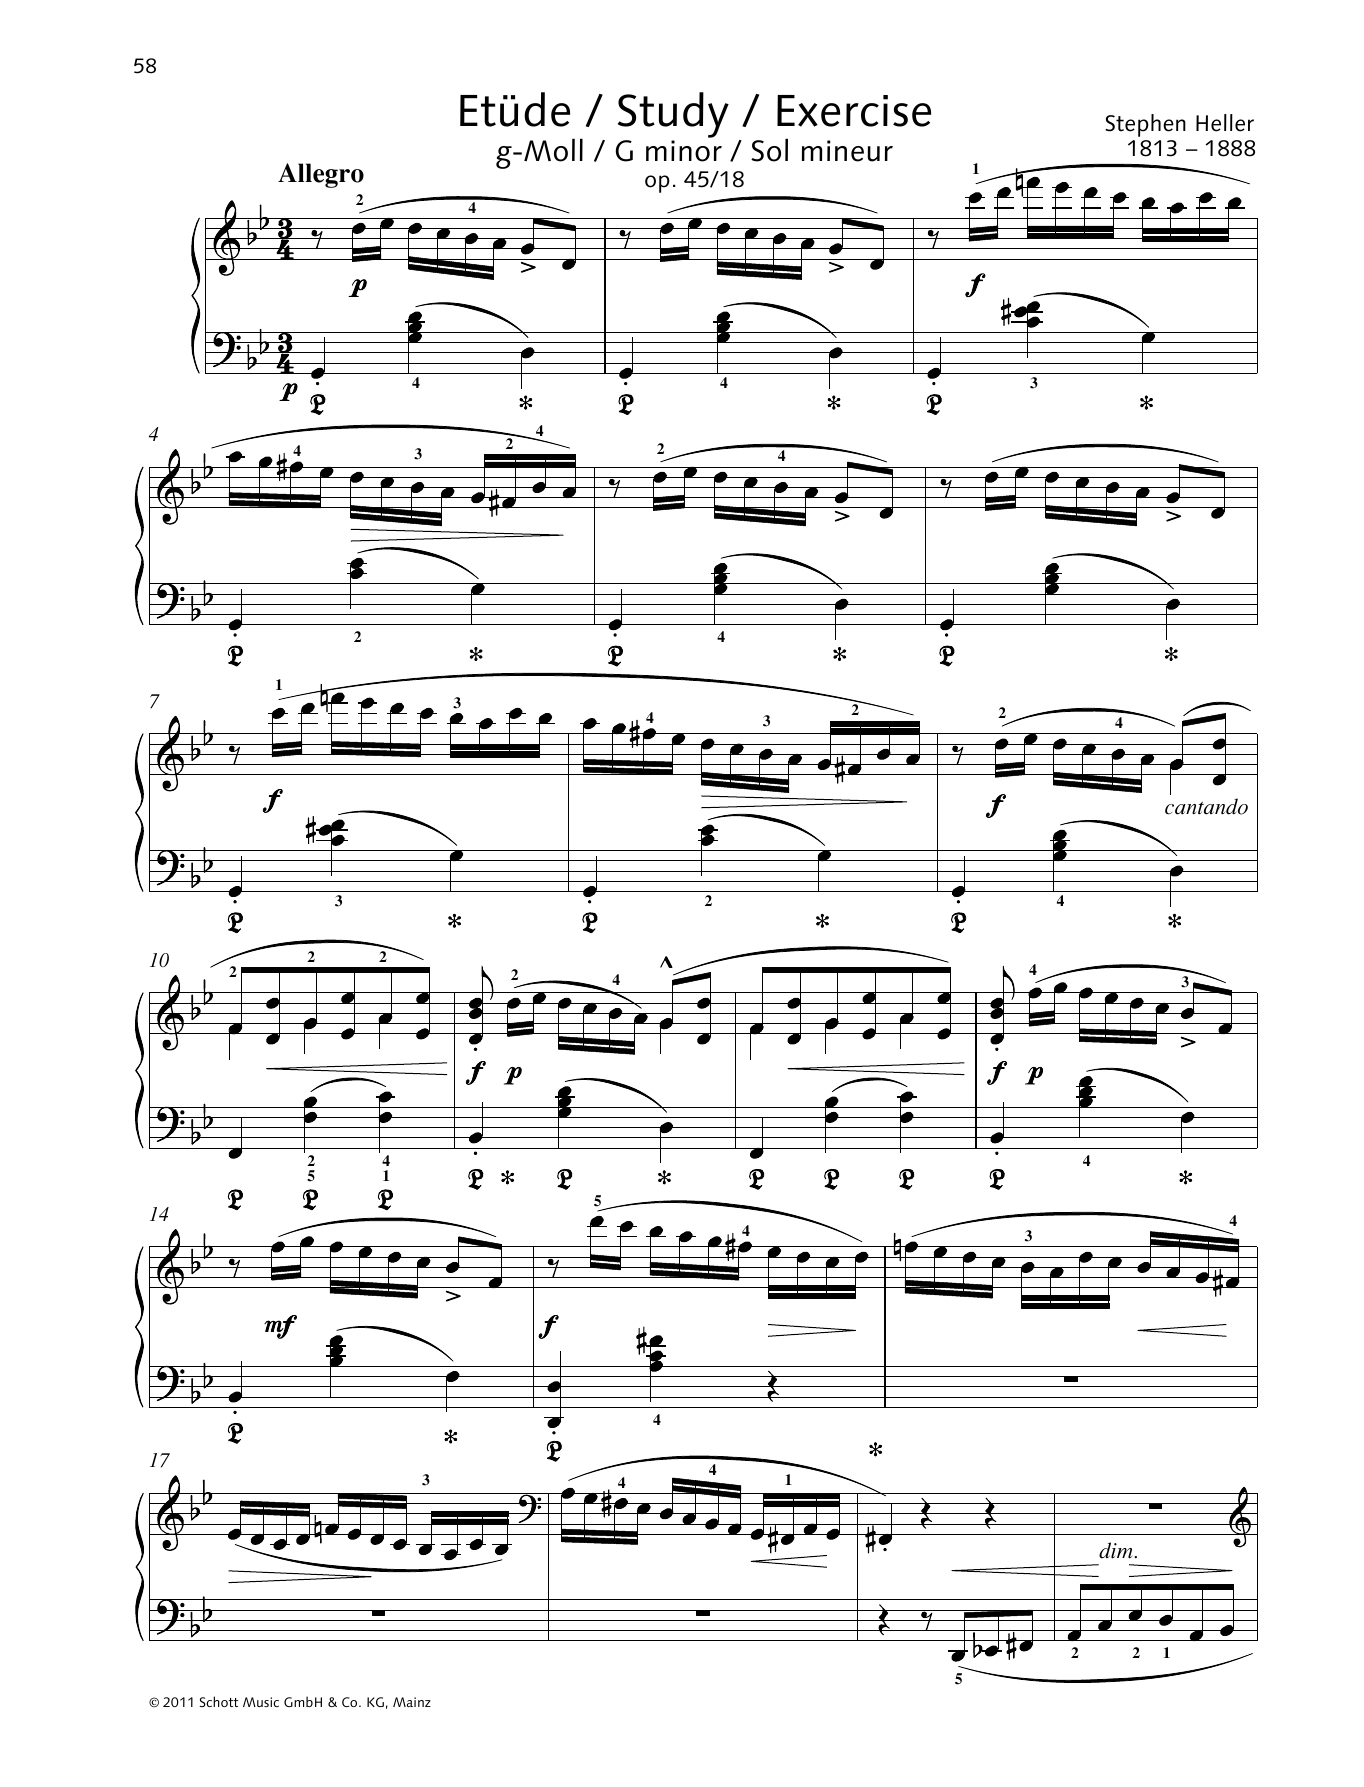 Download Stephen Heller Study G minor Sheet Music